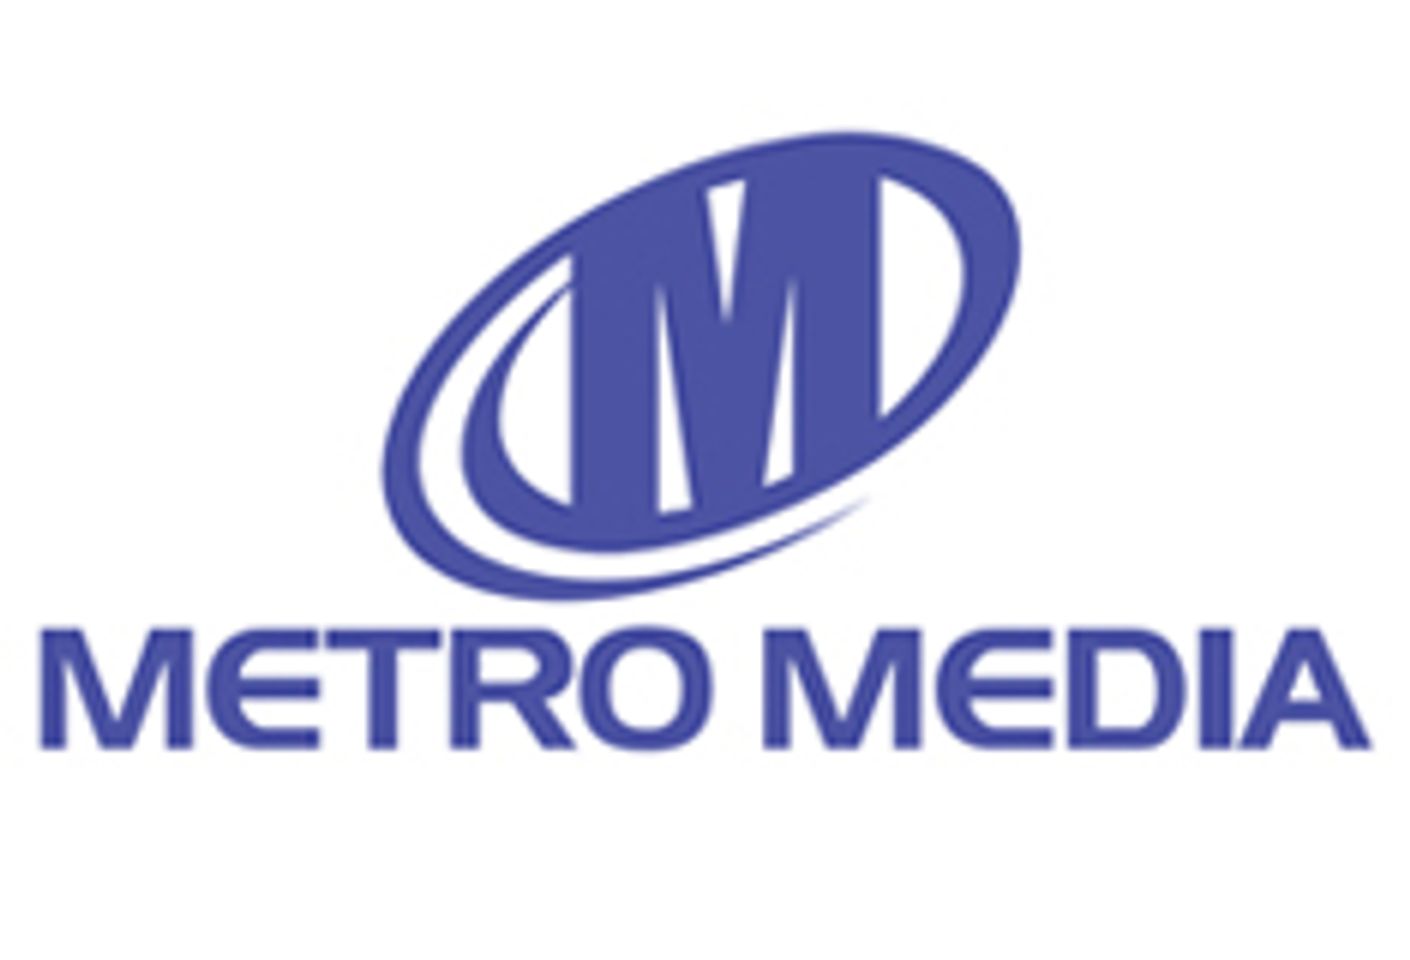 MetroMoney.com Adds RedHotTV to Its Webmaster Program